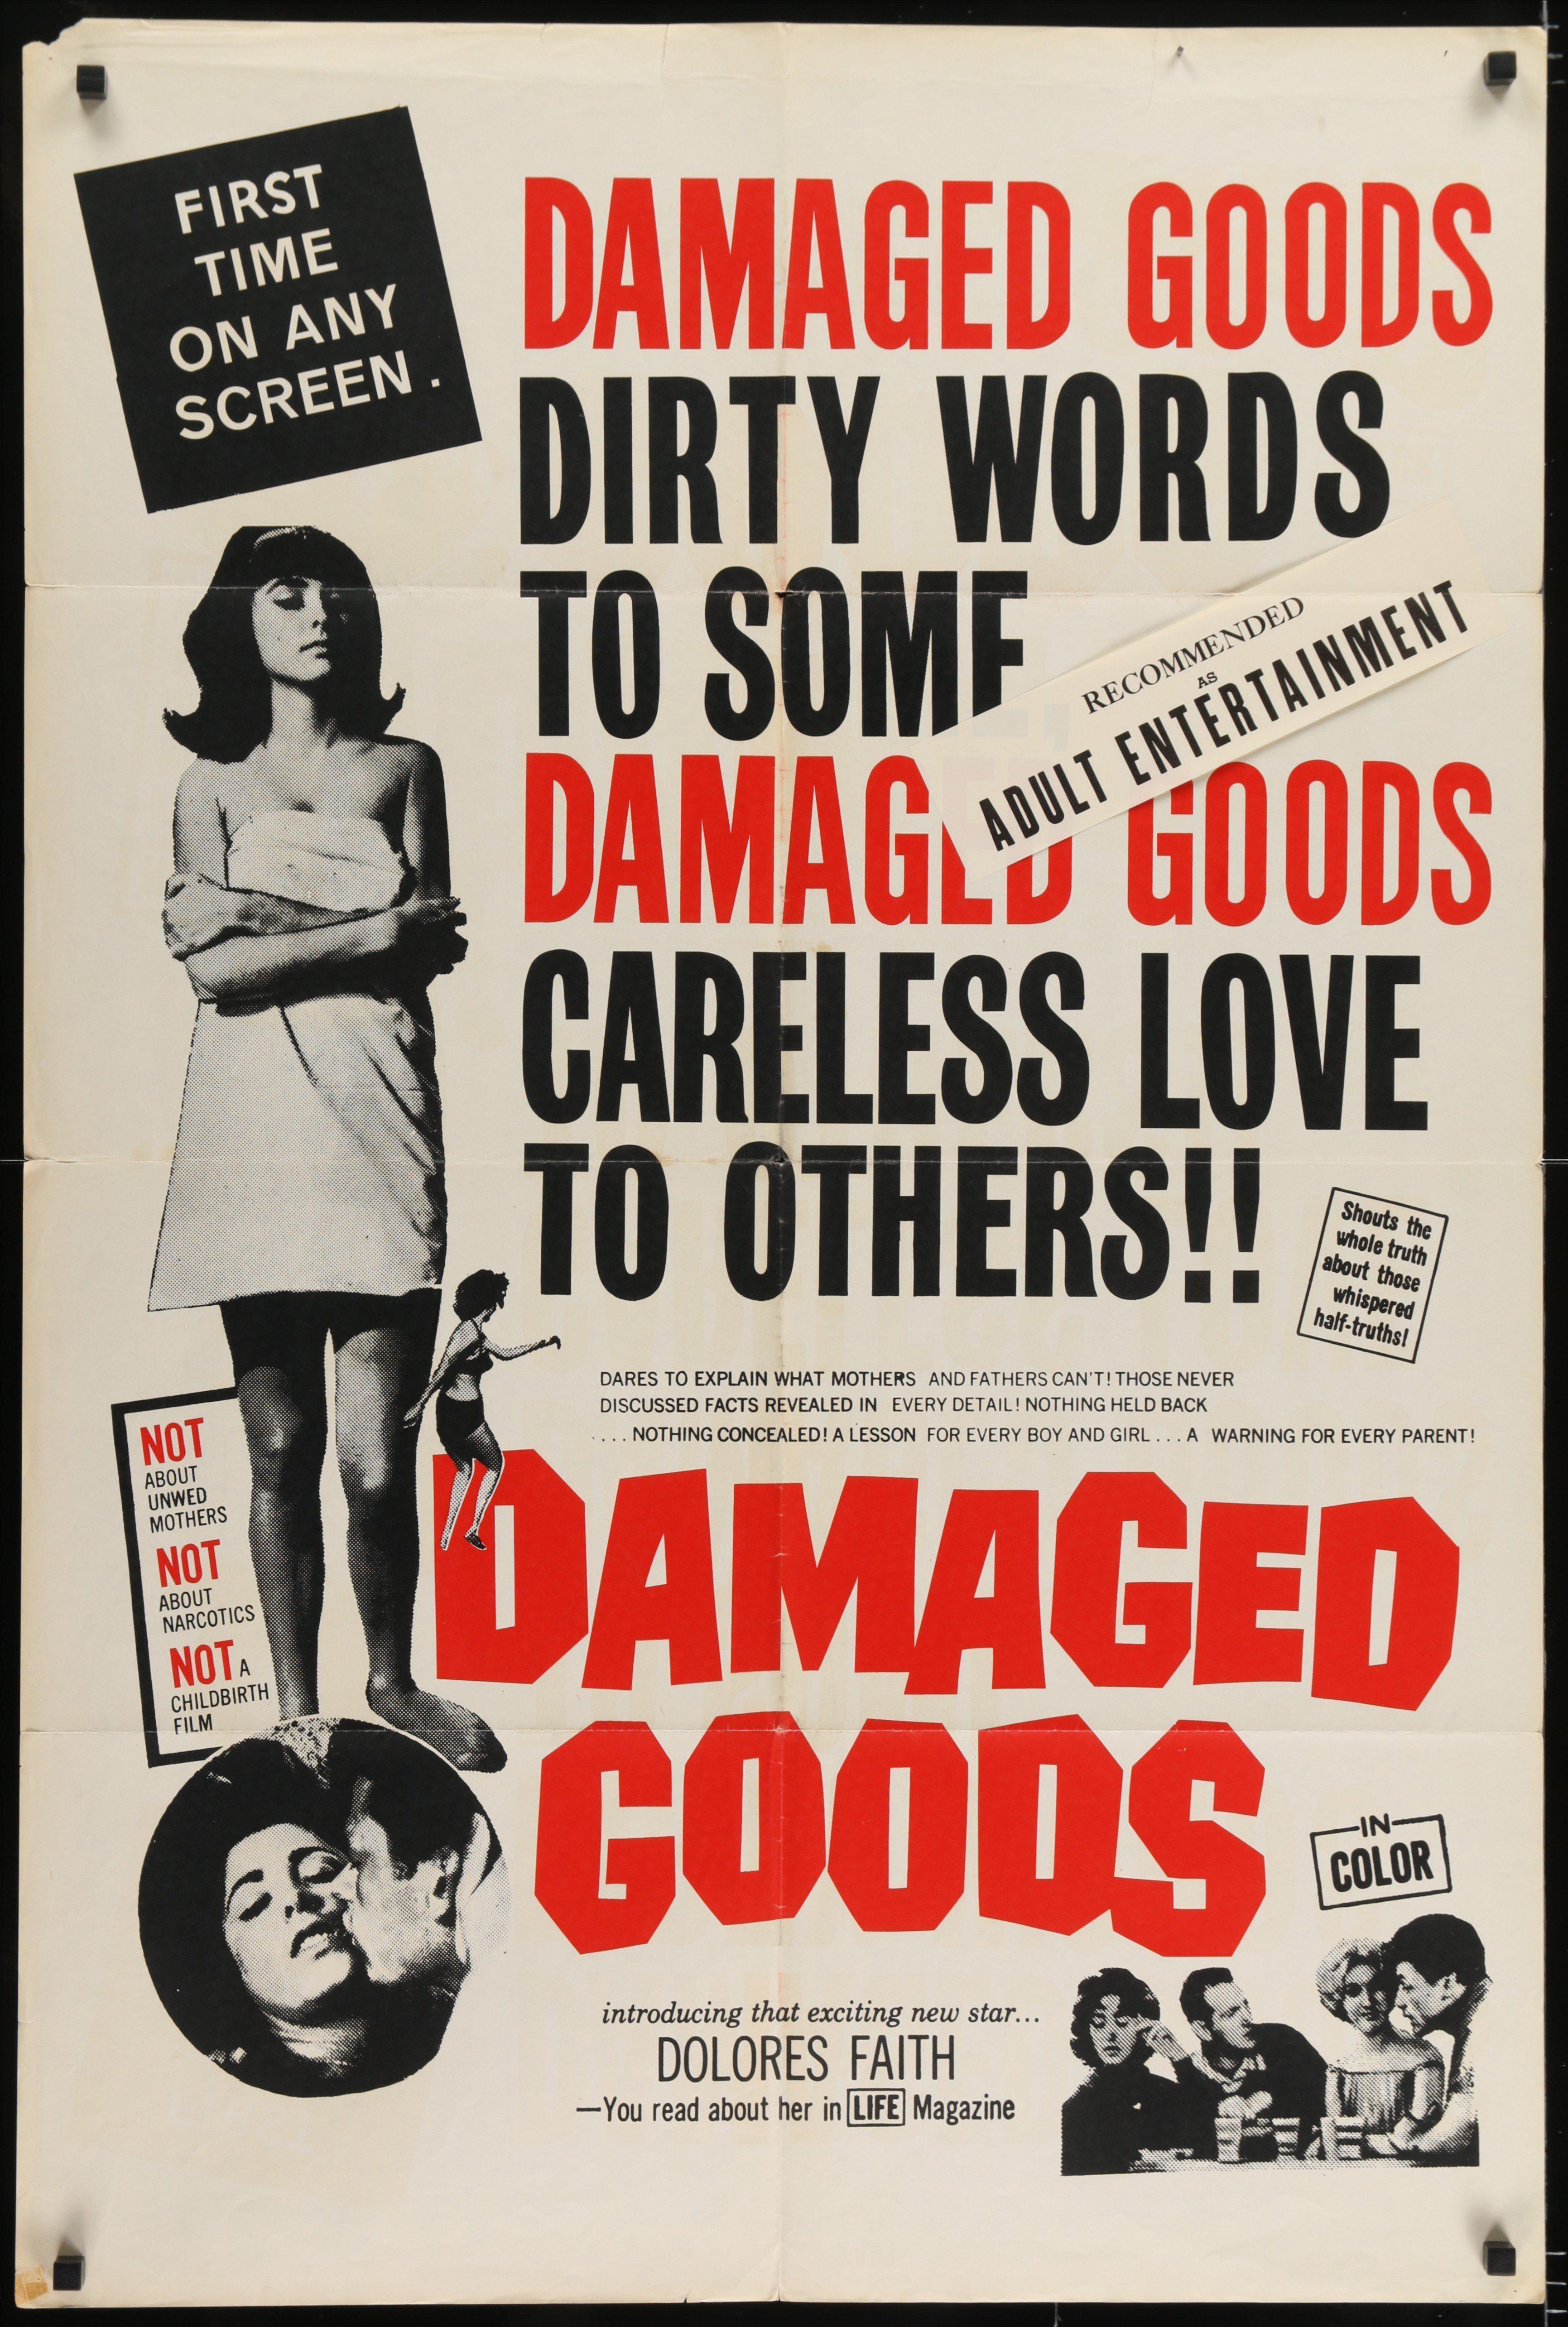 Damaged Goods (VD) Movie Poster 1964 ri 1 Sheet (27x41)